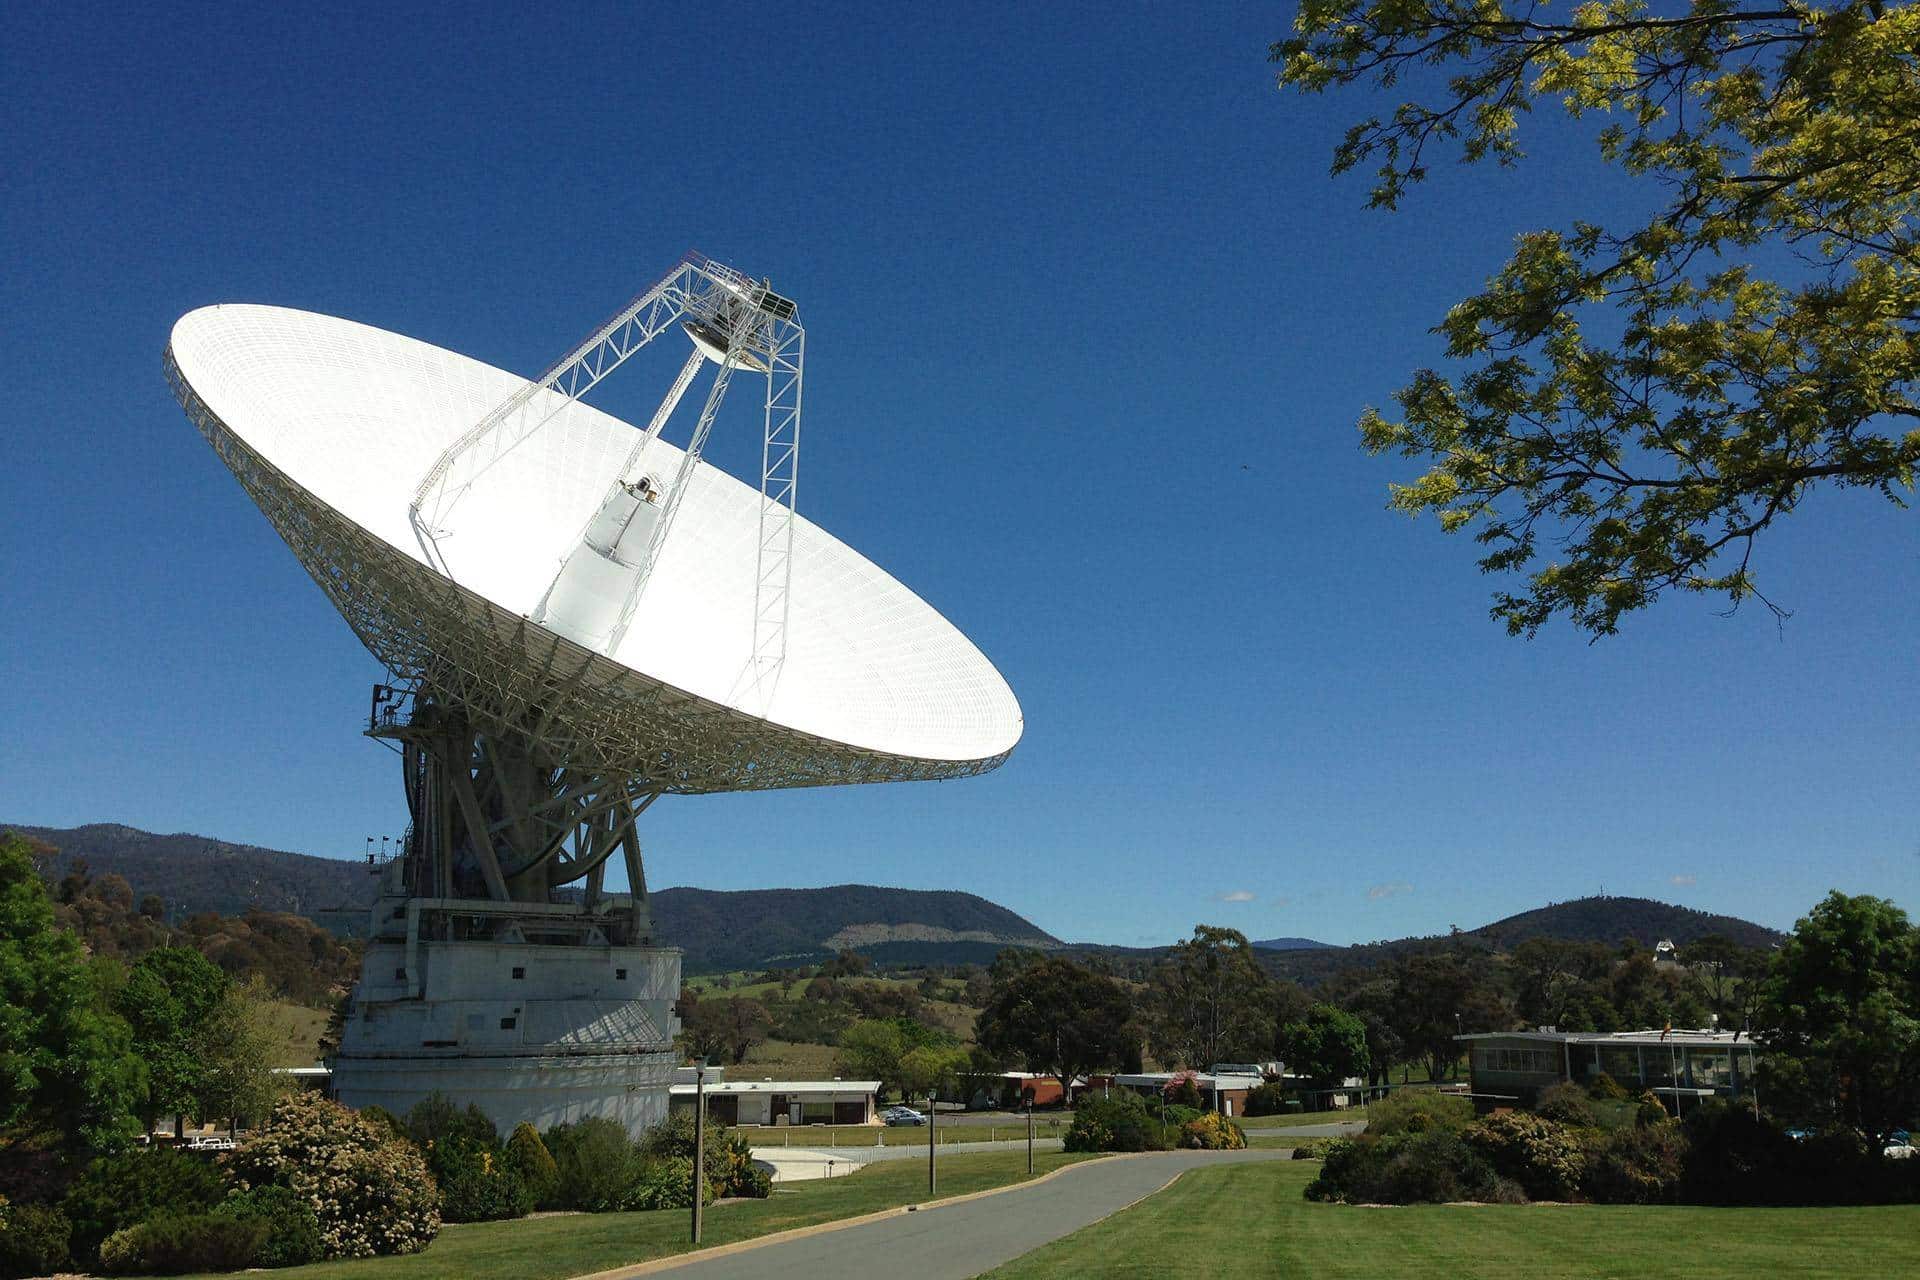 A Voyager 2 voltou a se comunicar com a Terra após 8 meses